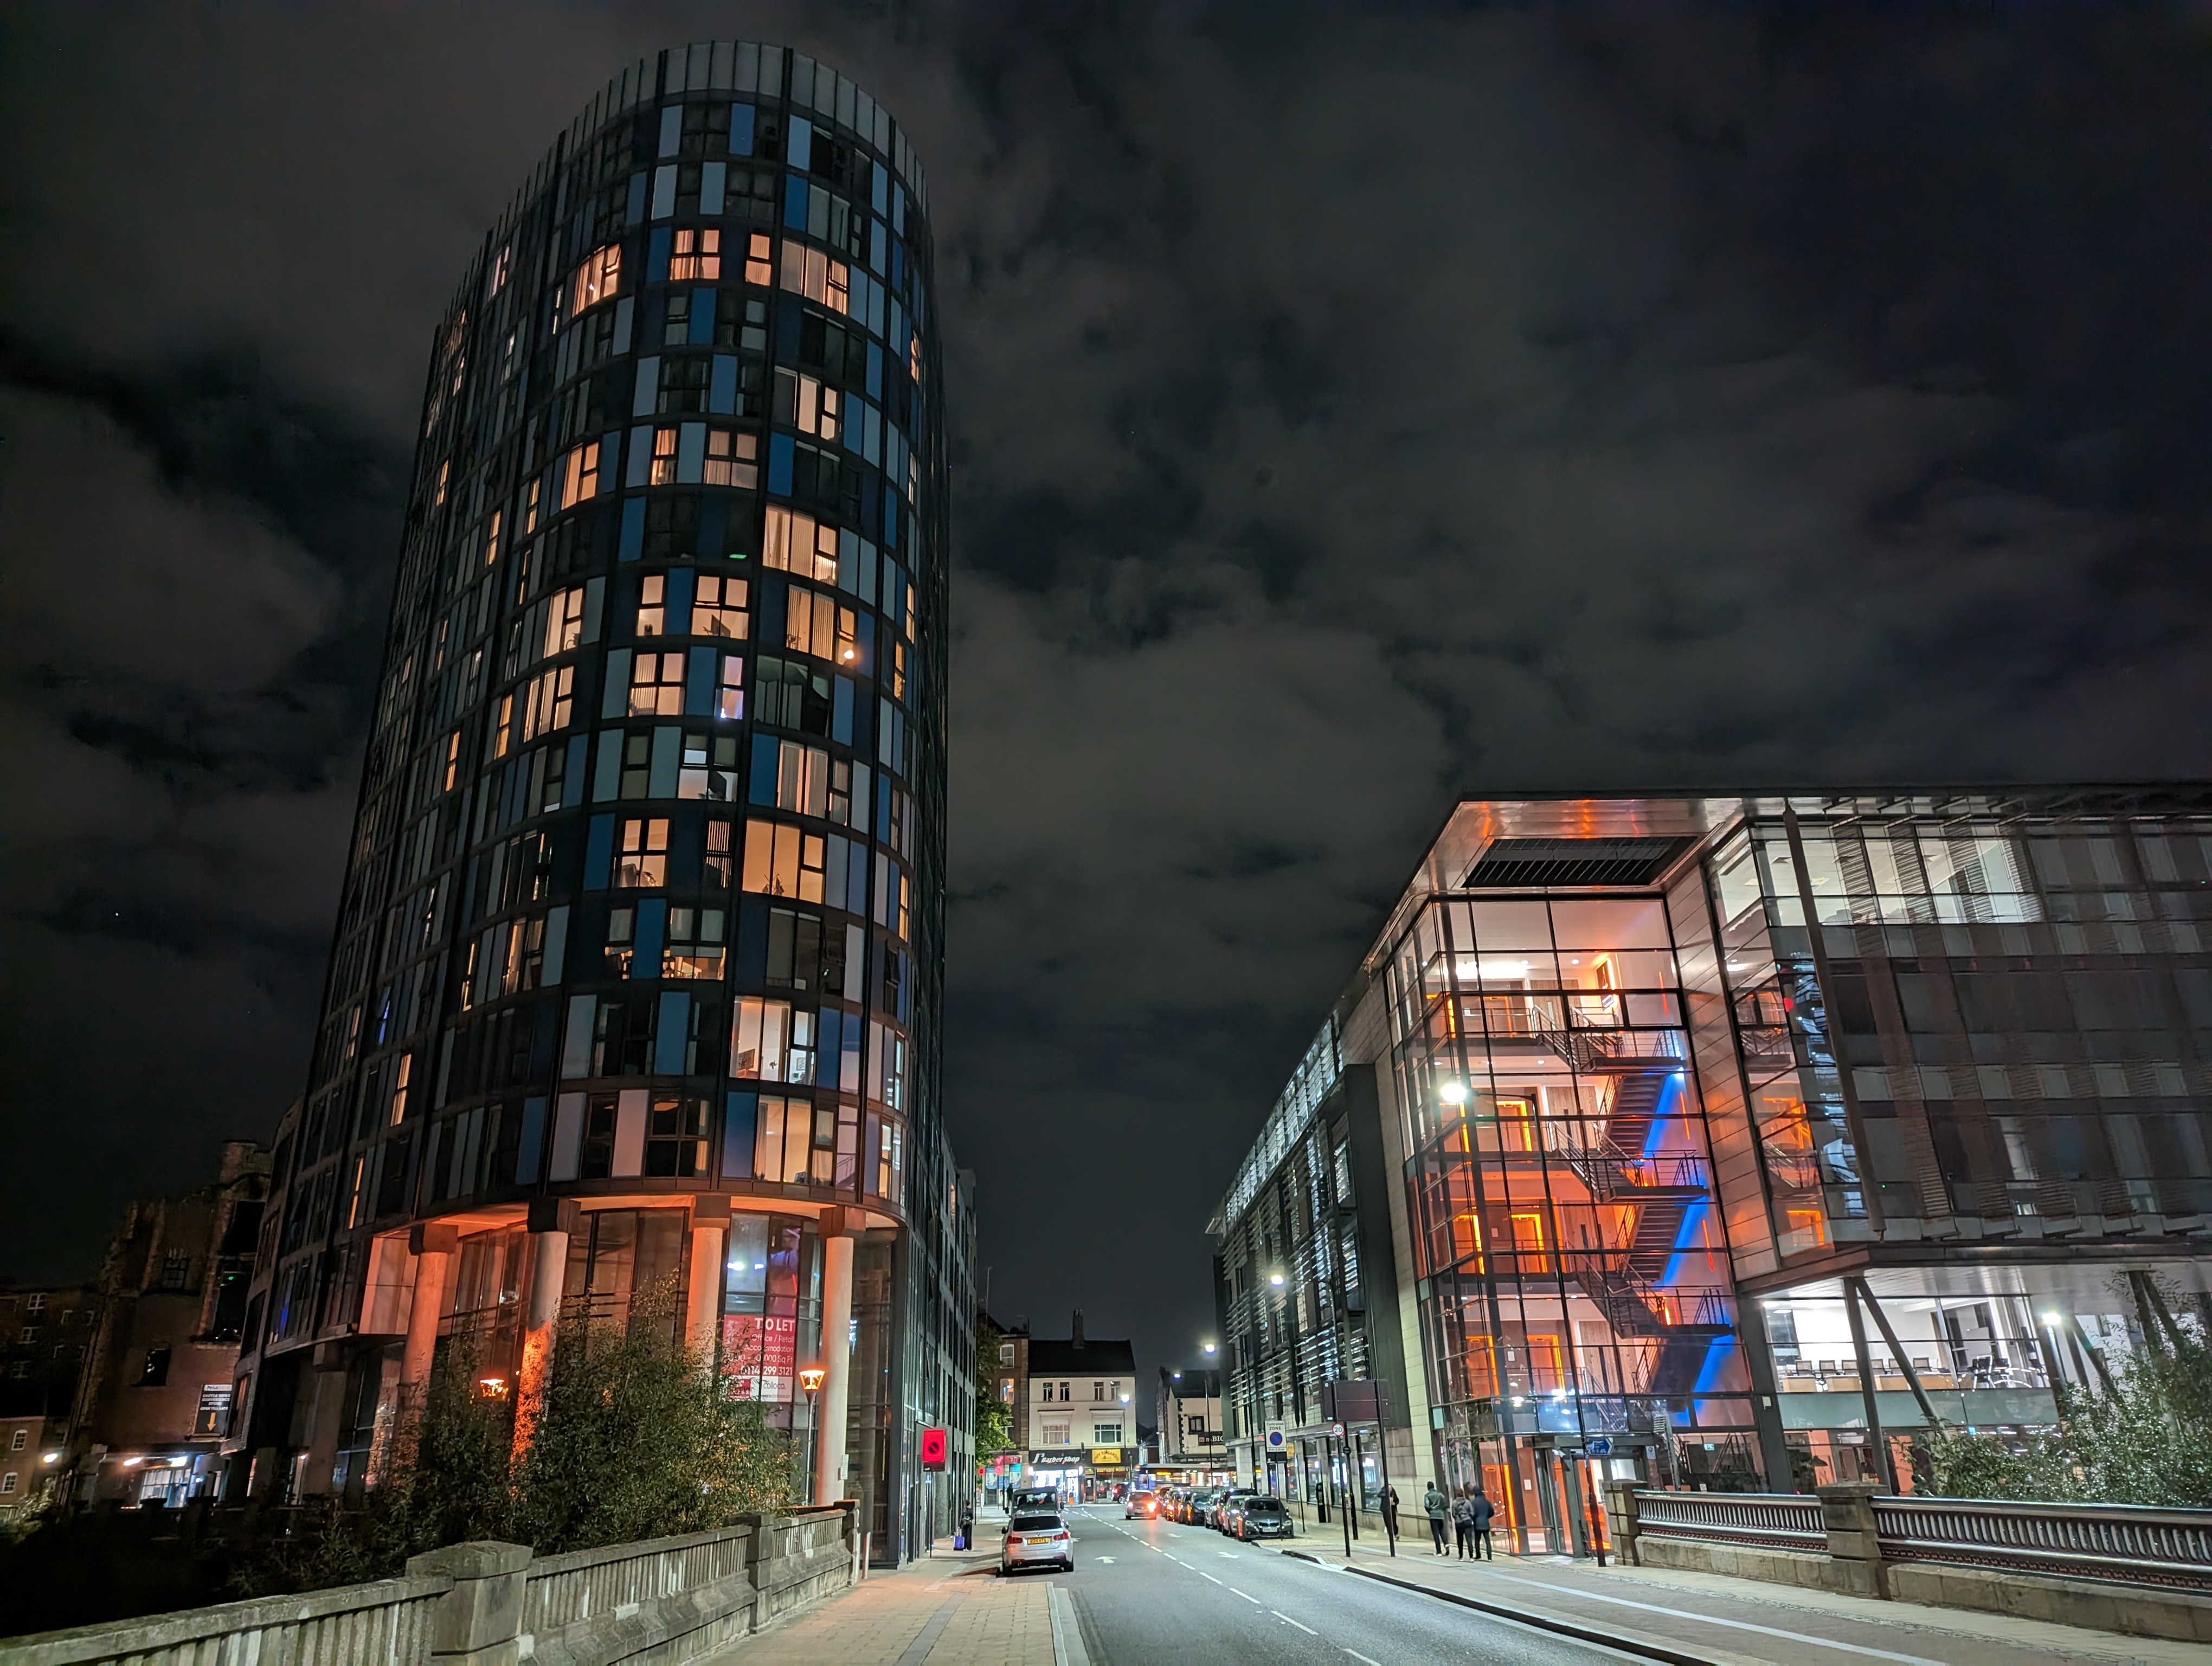 Night sight mode - Sheffield architecture - 1/24s, f/1.8, ISO592, 24mm equivalent, photo: Joshua Waller